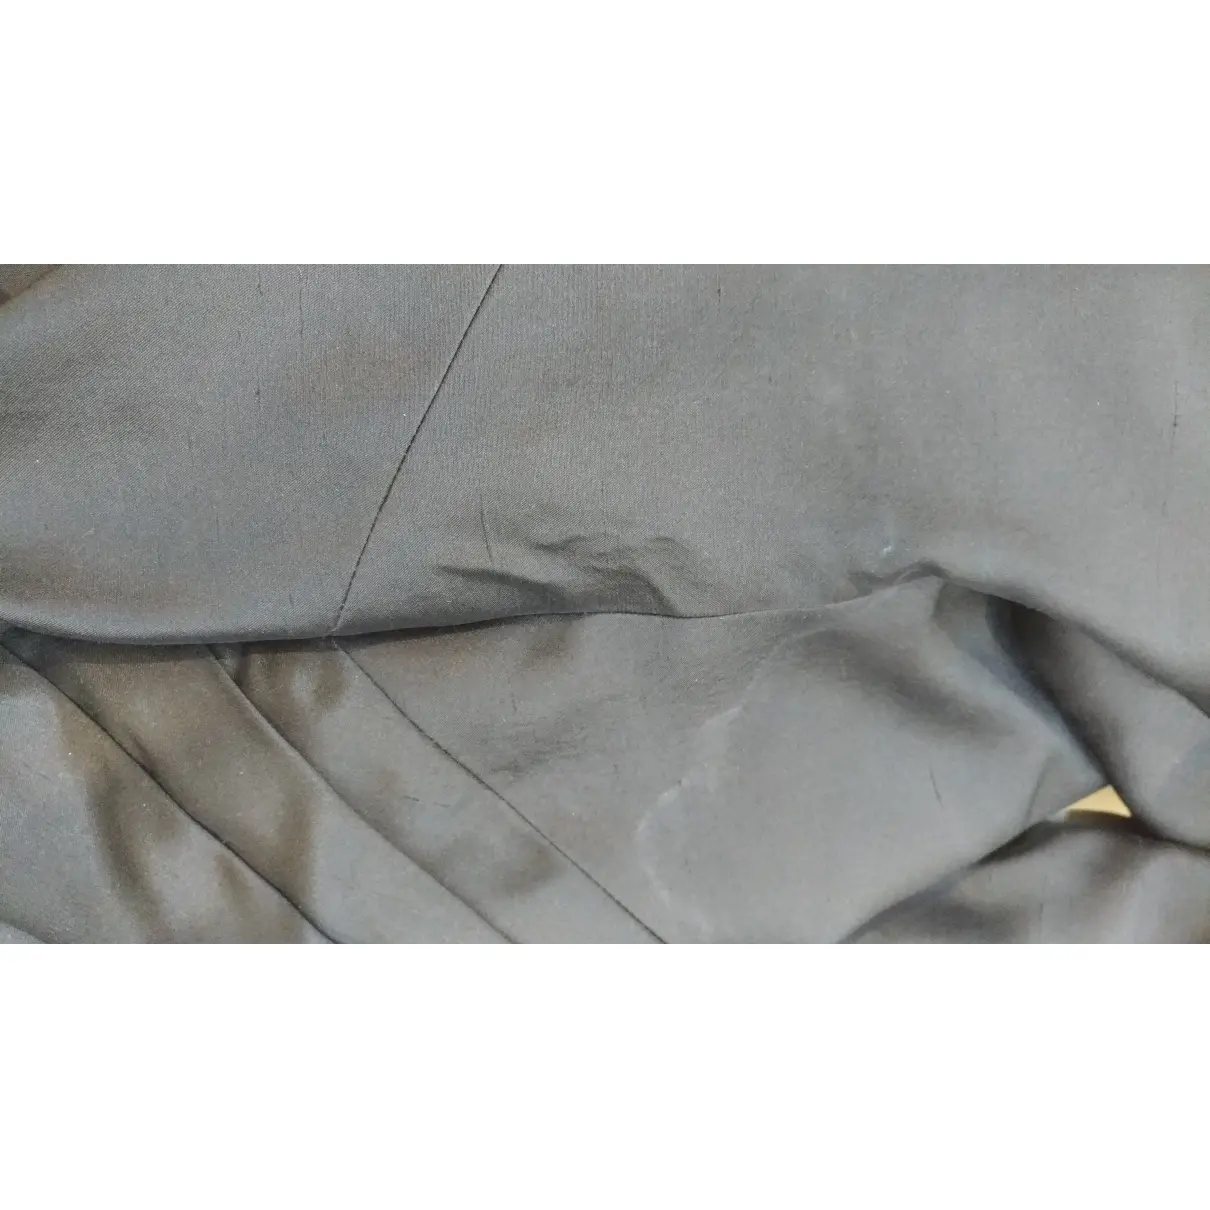 REQUIEM Silk mid-length dress for sale